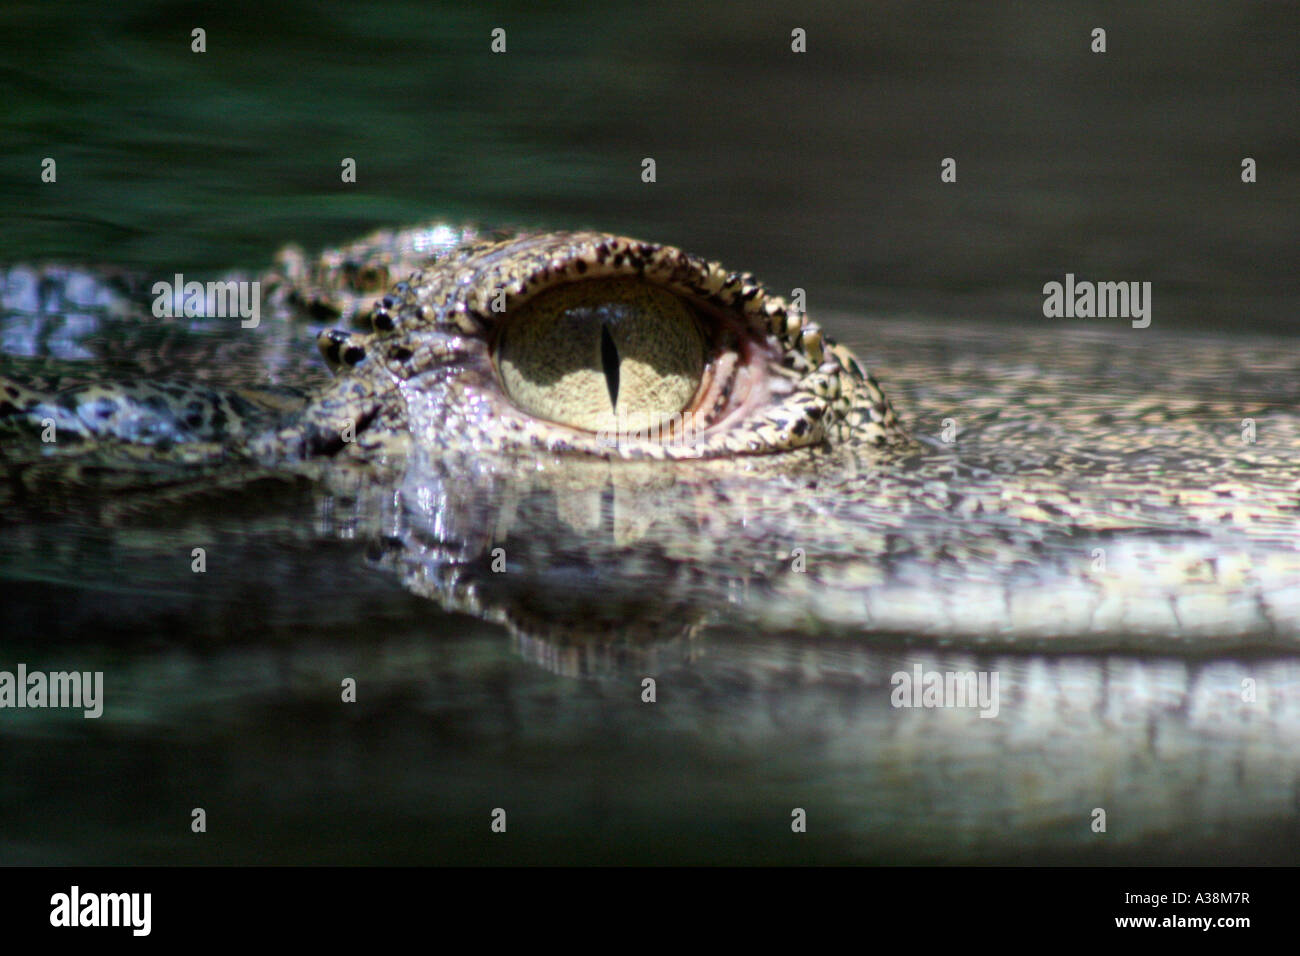 Crocodile close-up in Singapore Zoo Stock Photo